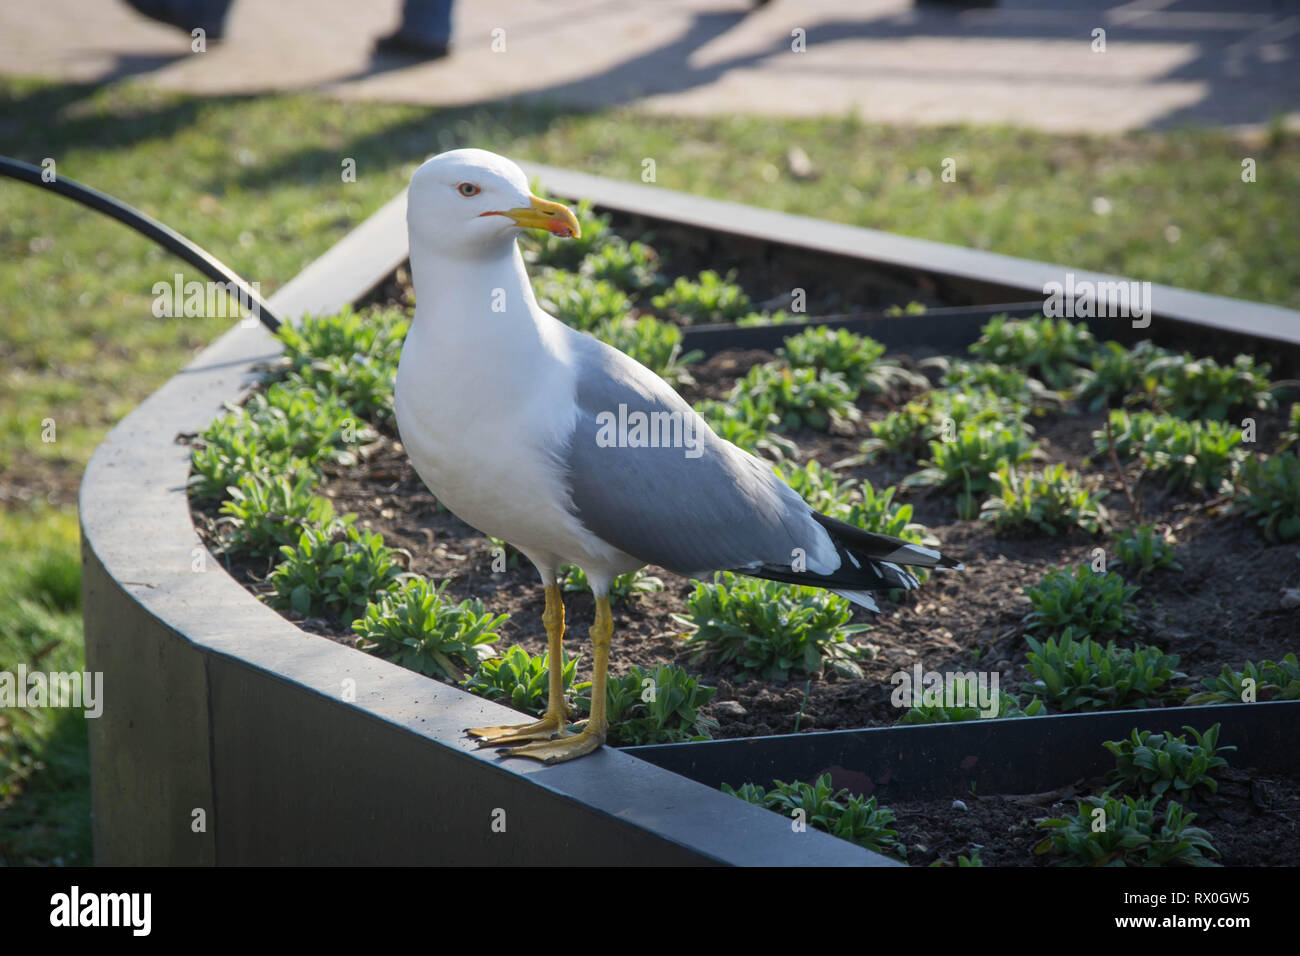 White seagull sits in a city garden, bird sitting in a flower stand, bird portrait, urban environment Stock Photo